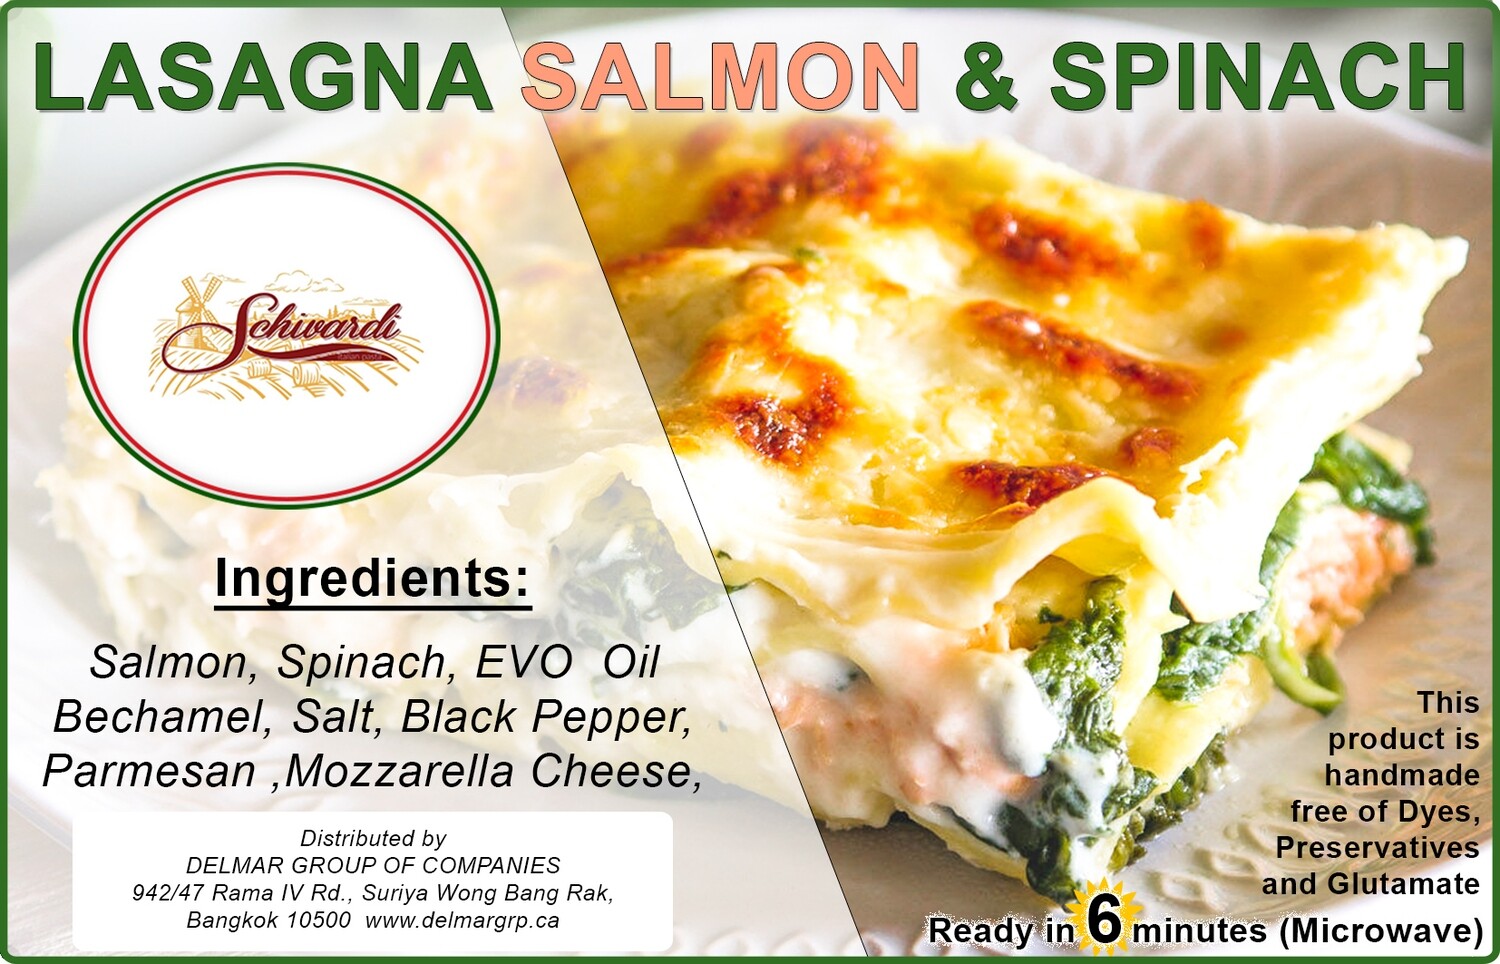 Lasagna Salmon & Spinach